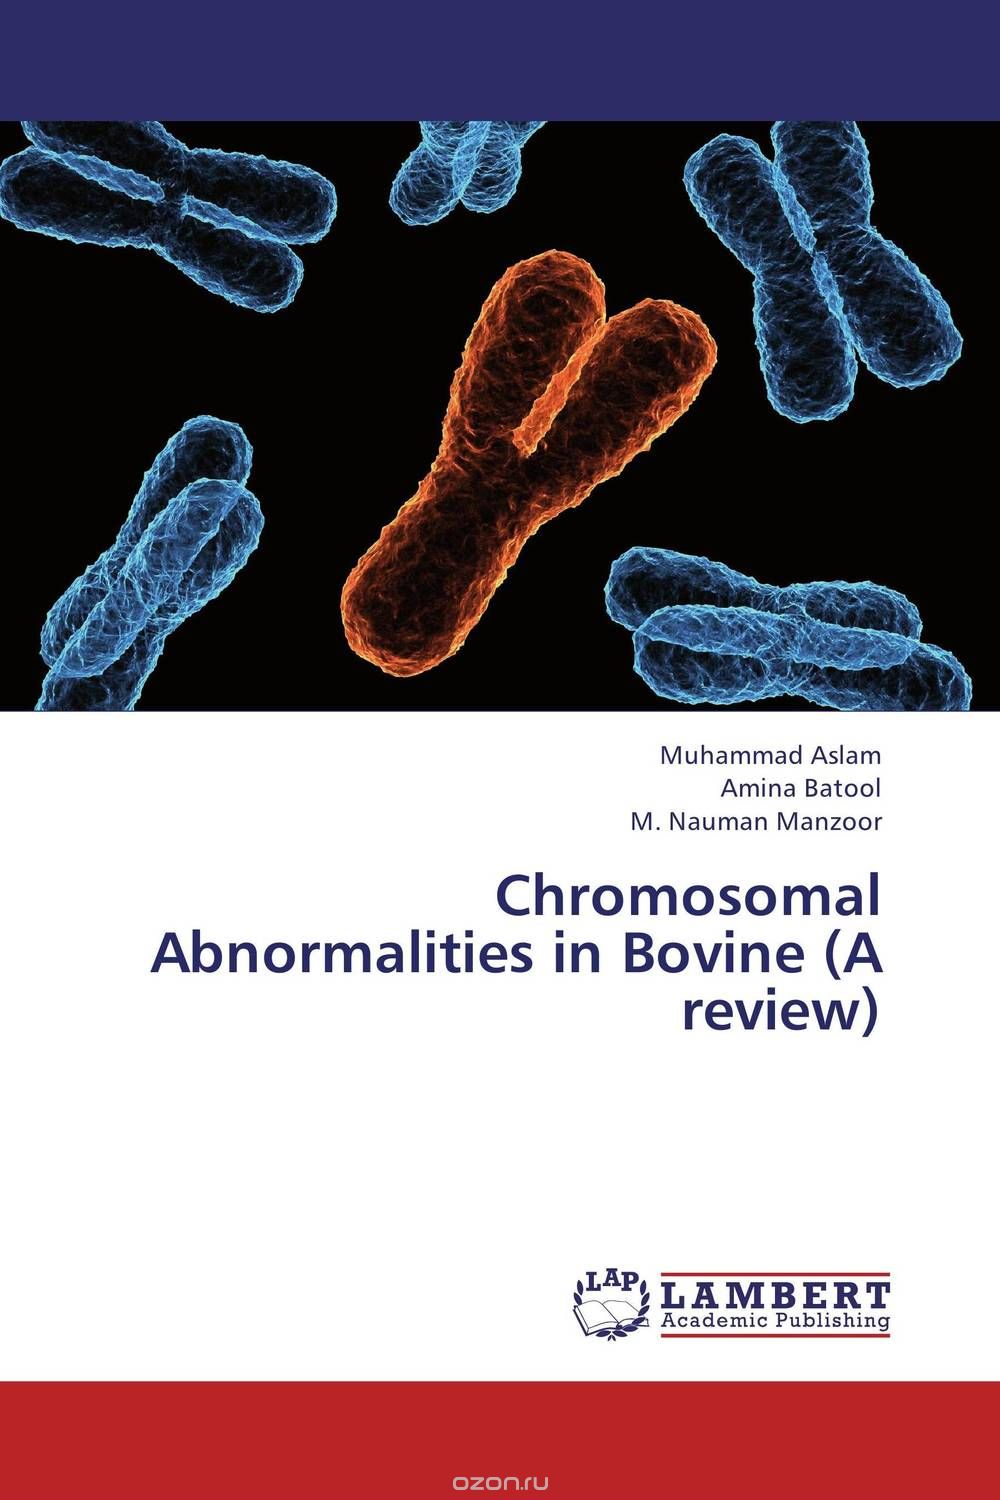 Скачать книгу "Chromosomal Abnormalities in Bovine (A review)"